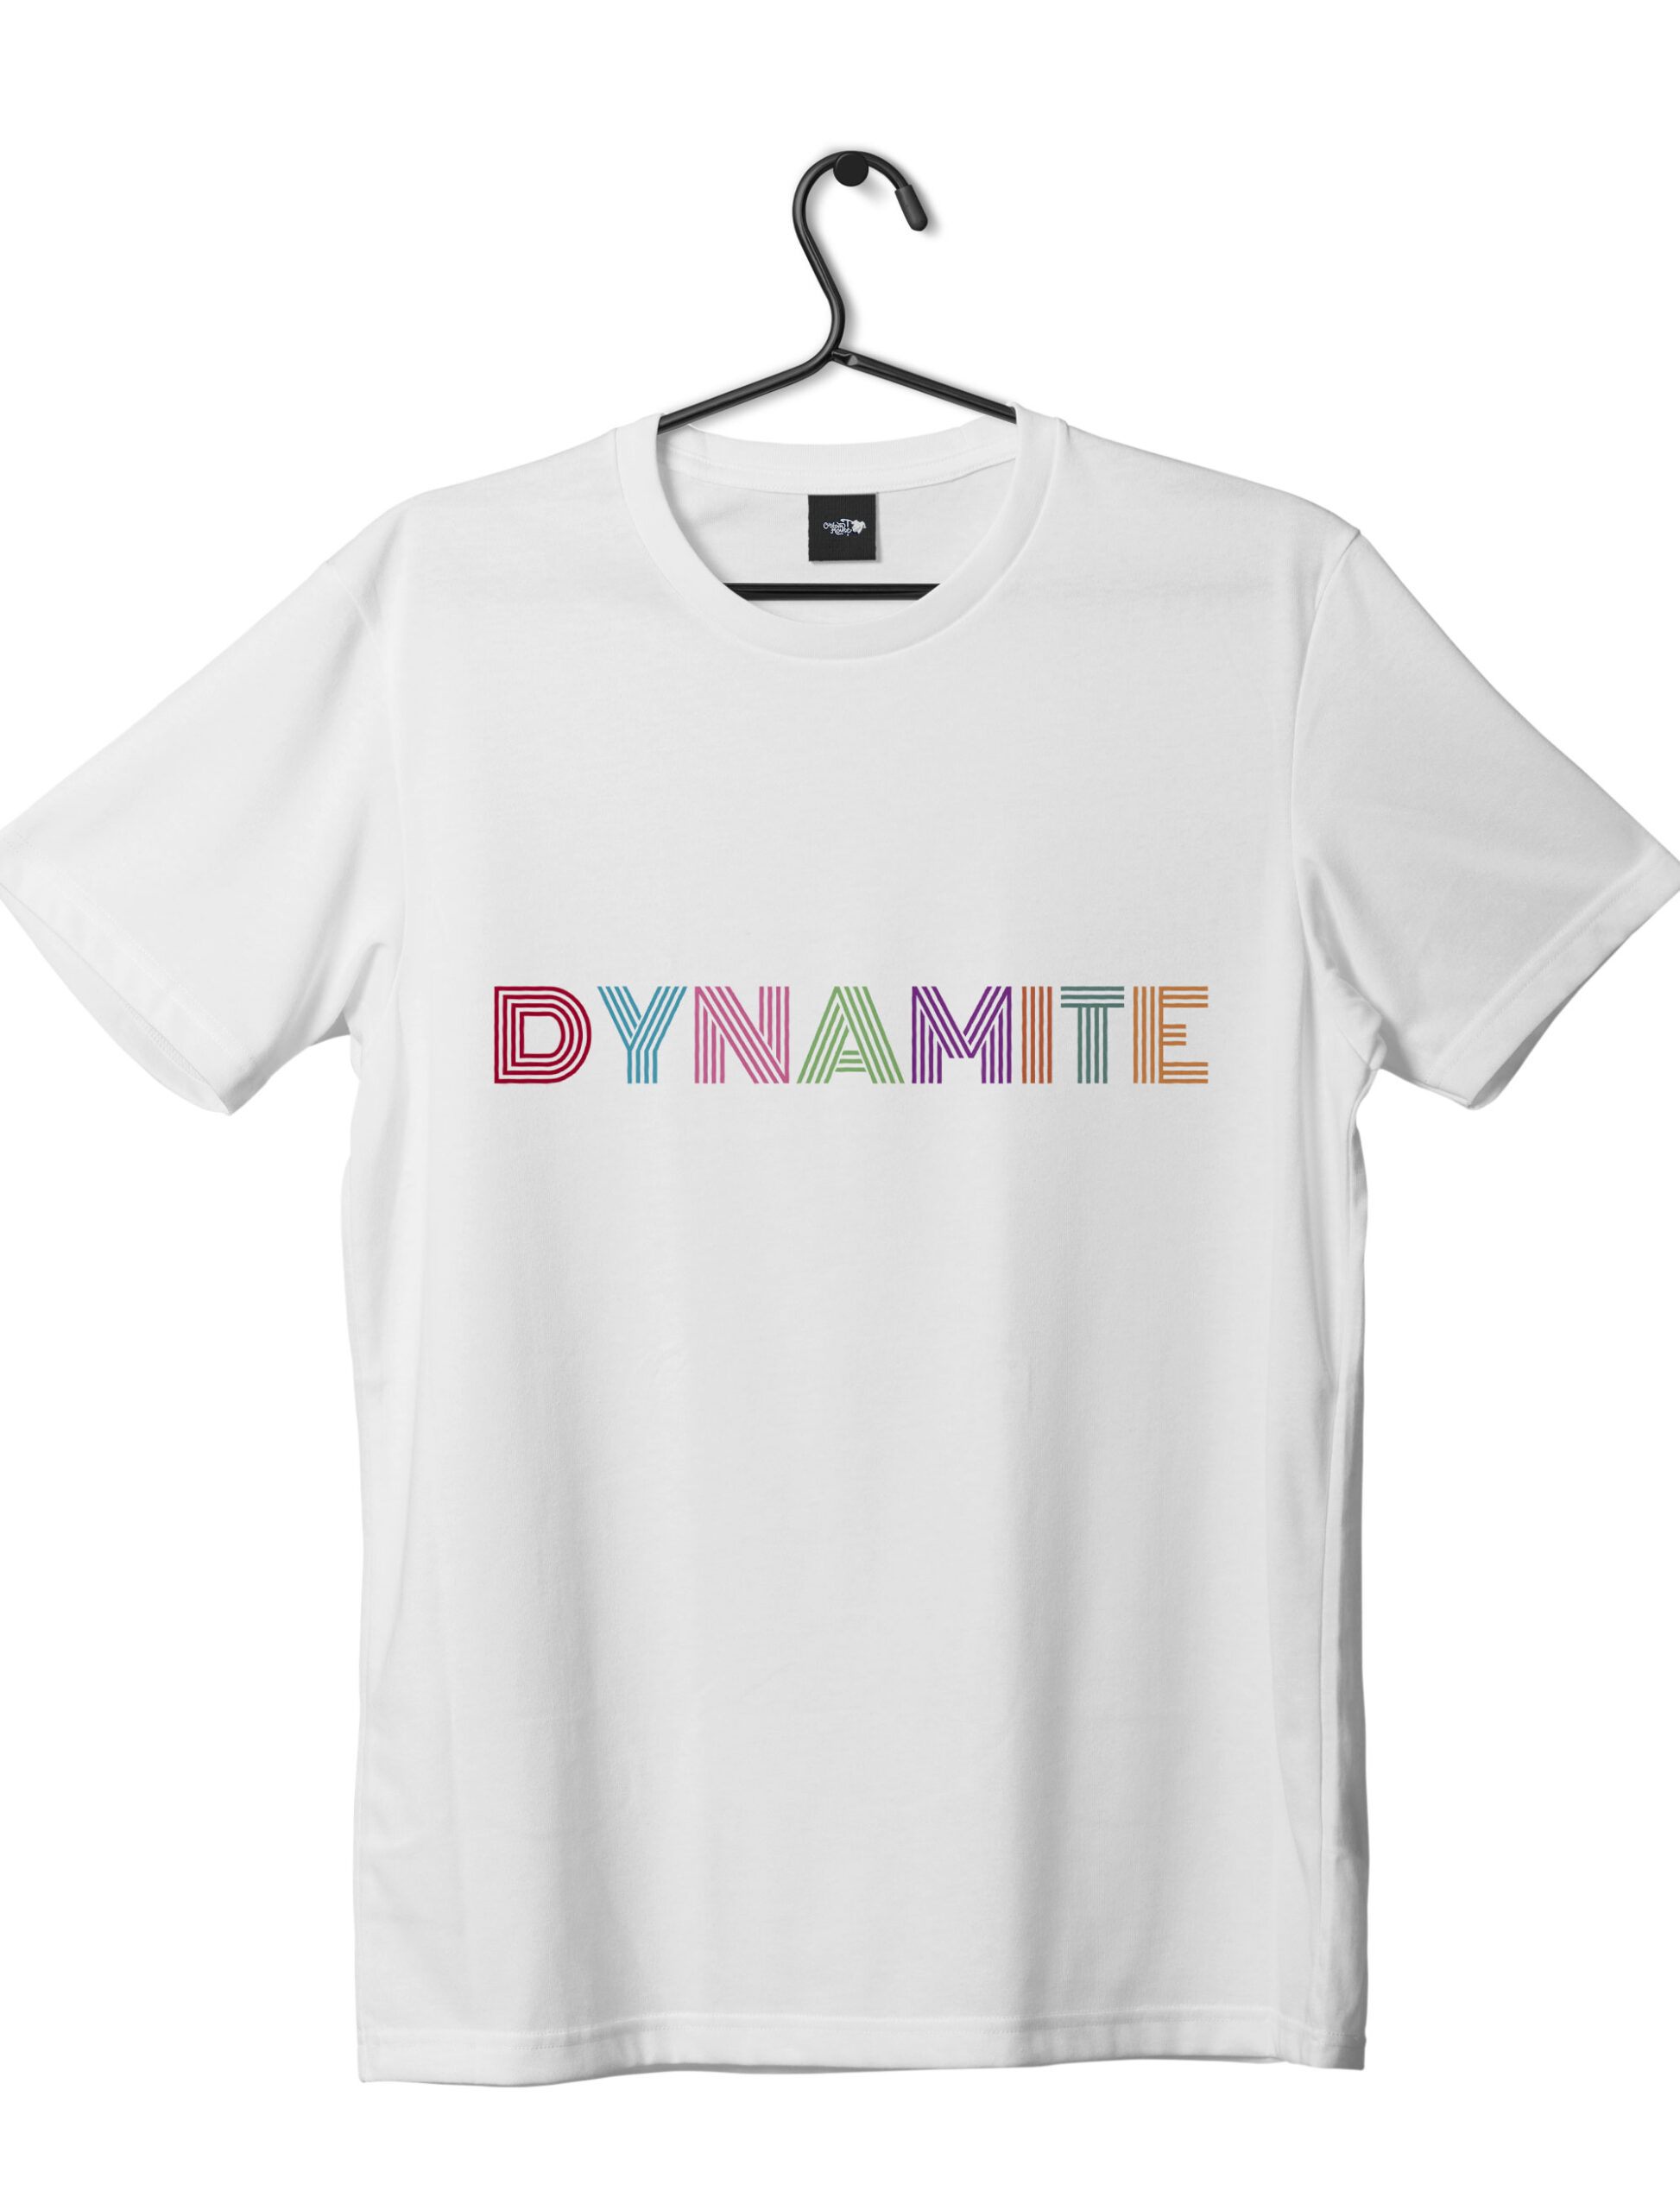 BTS DYNAMITE Tシャツ - アイドル